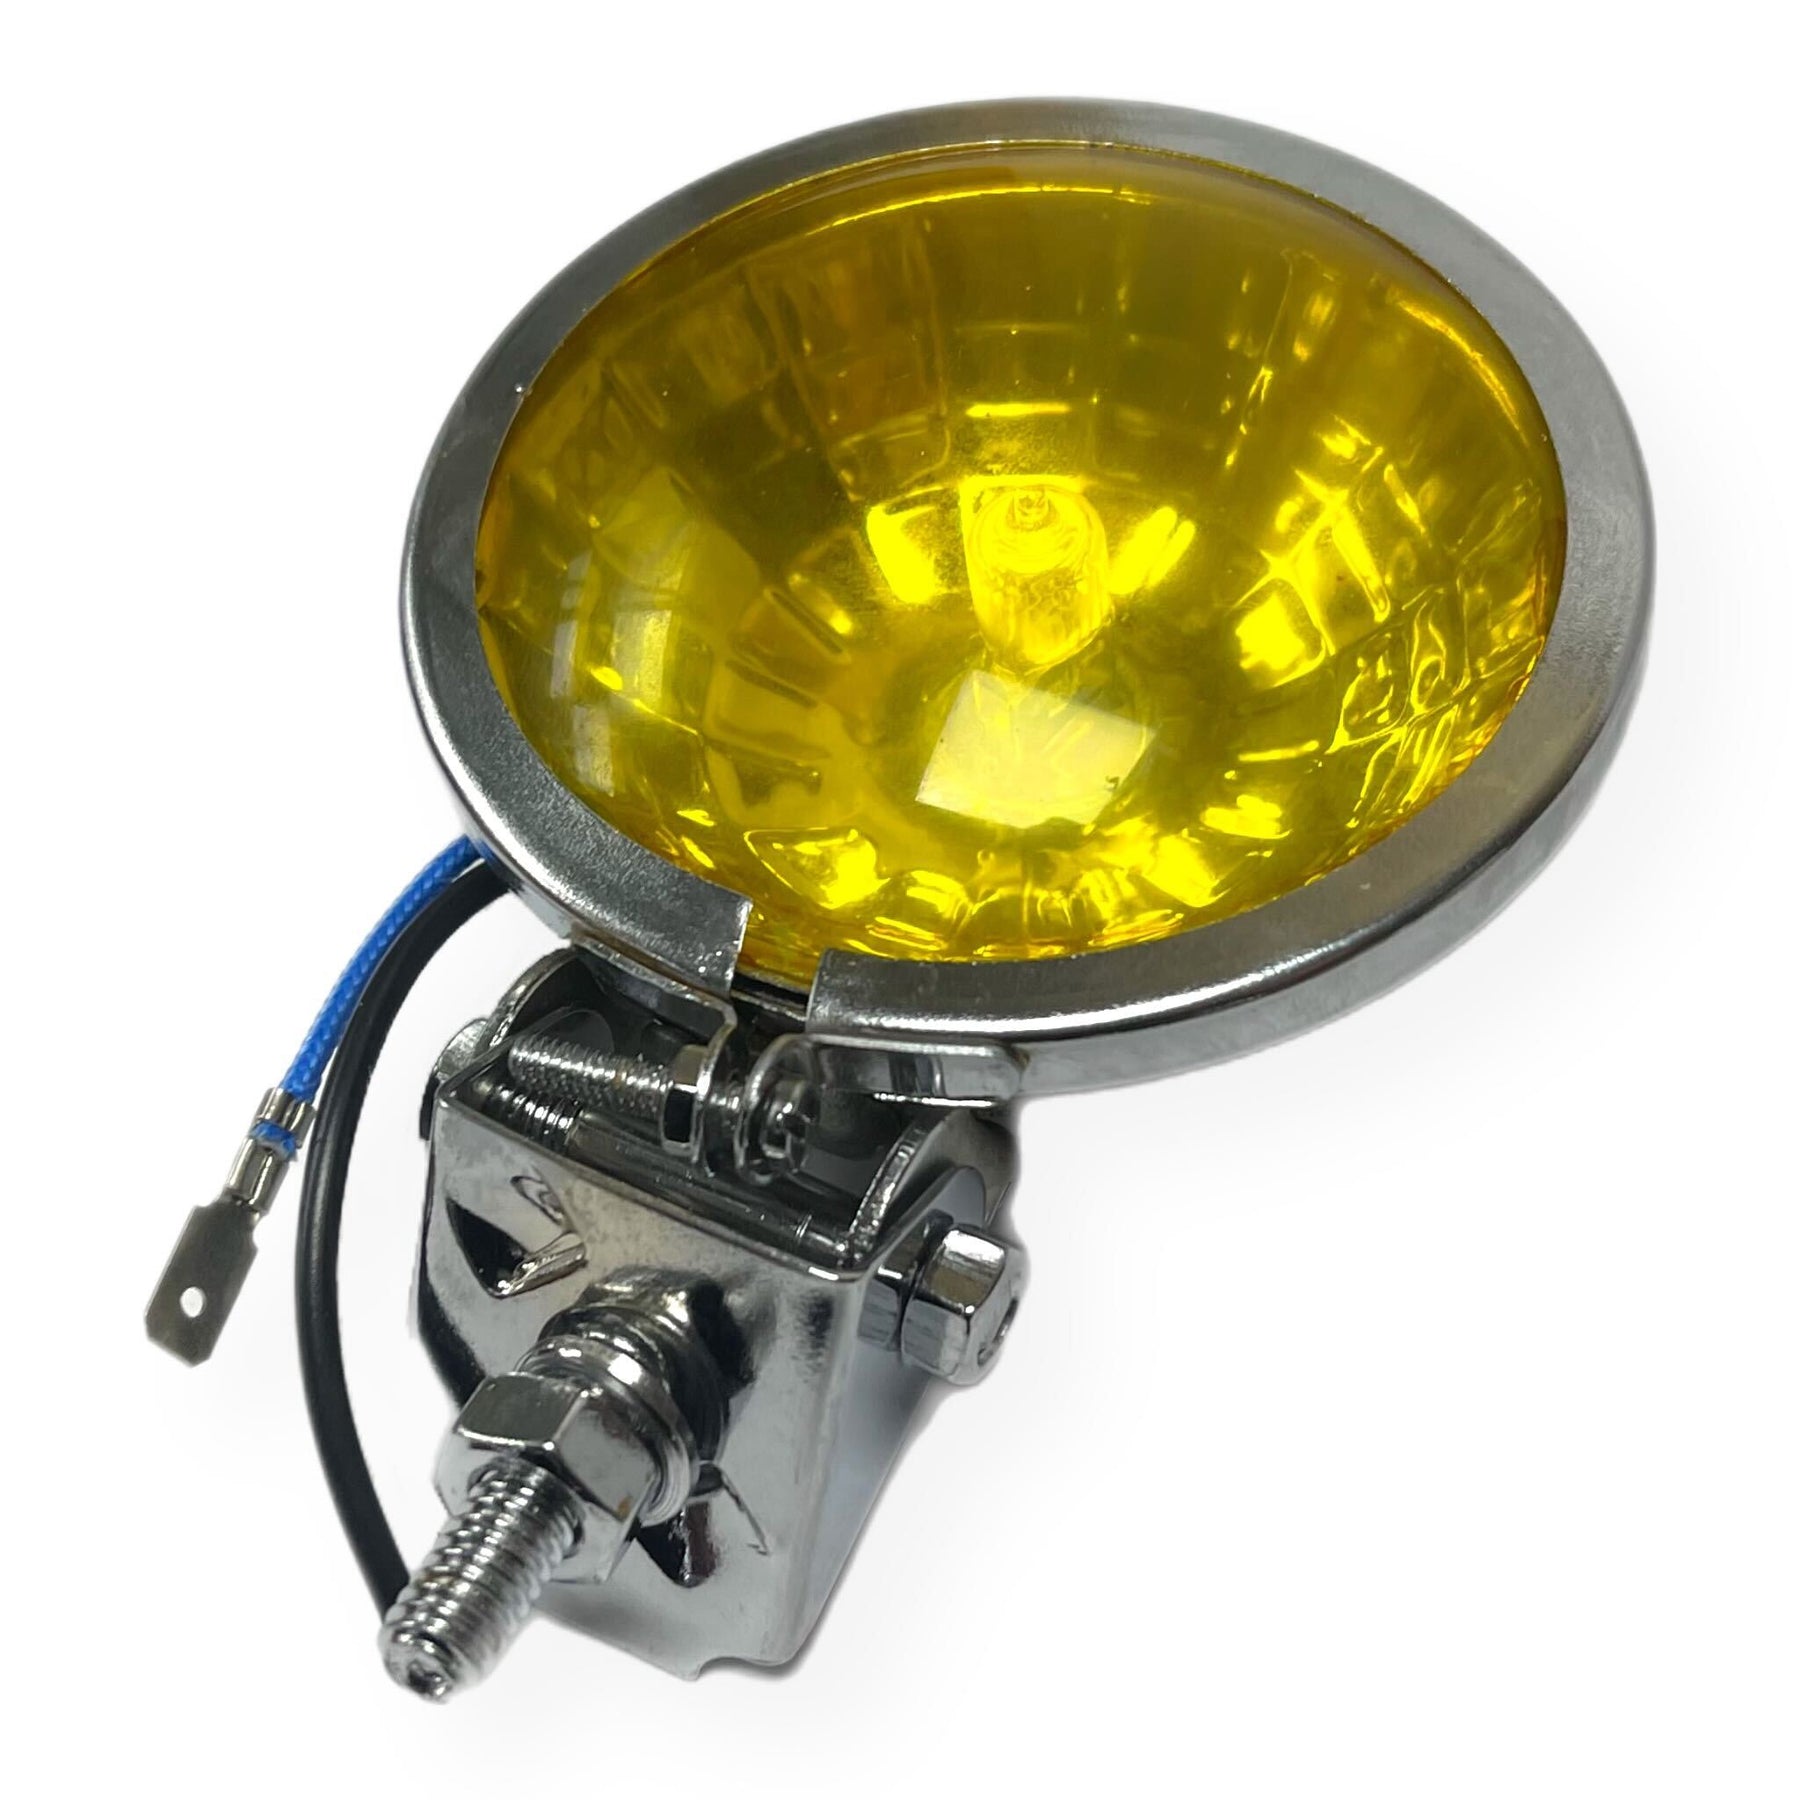 Vespa Lambretta Scooter Lamp Spot Light 9cm Honeycomb Chrome Yellow Lens